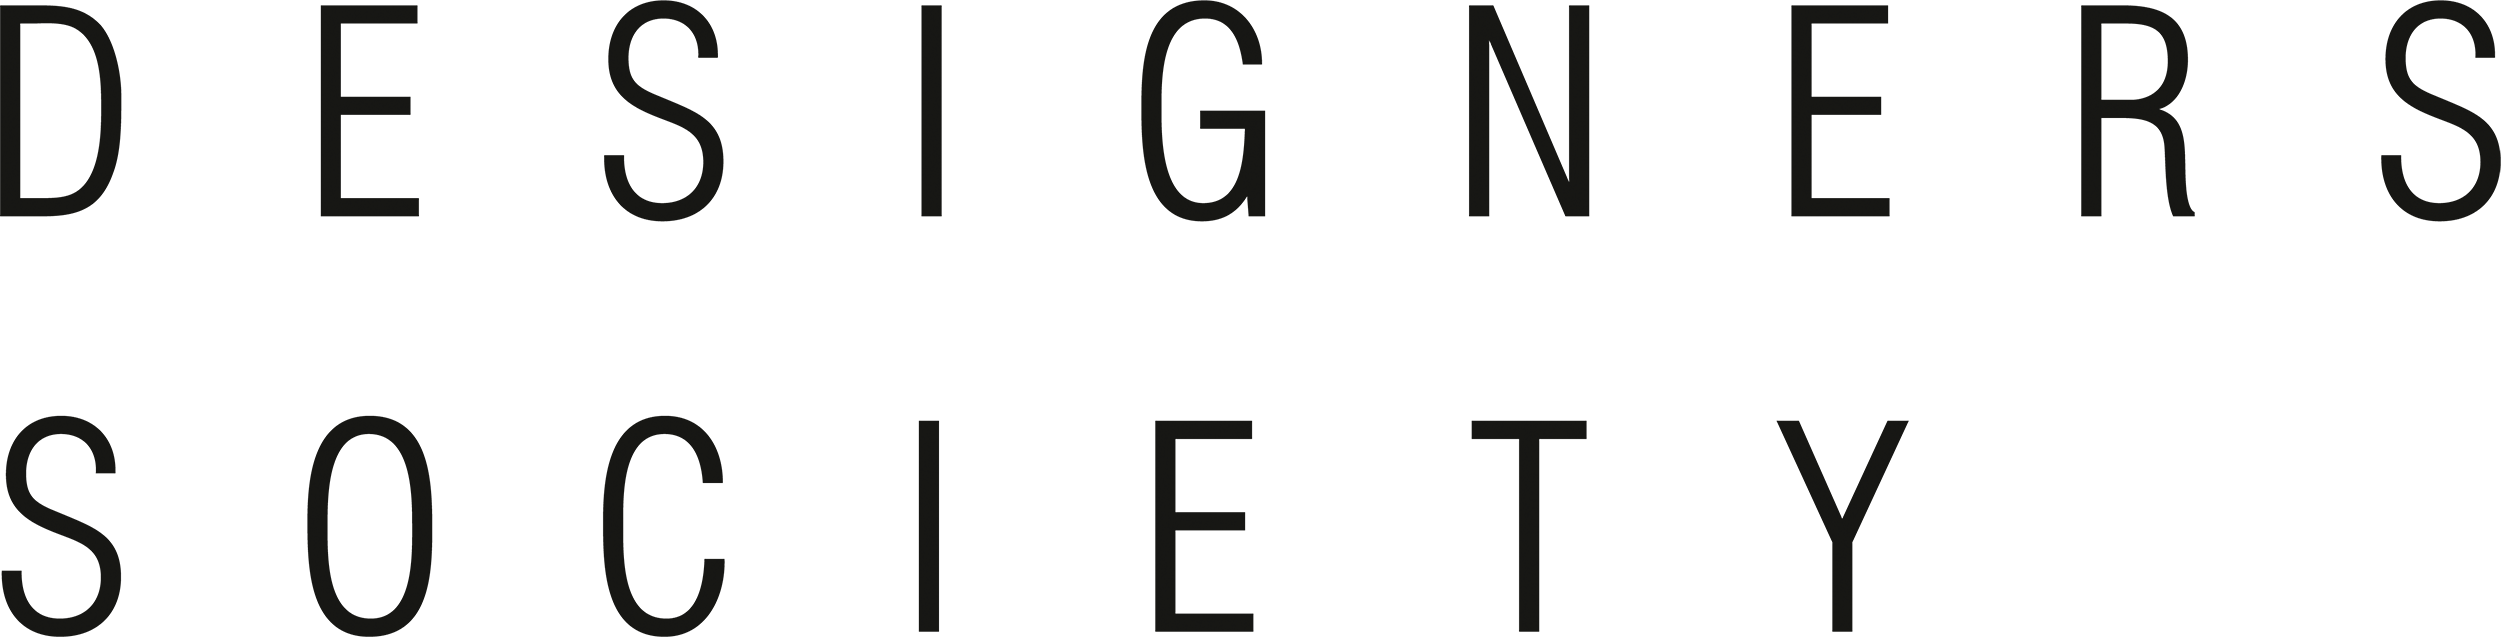 Designers Society Logo 1652780017 